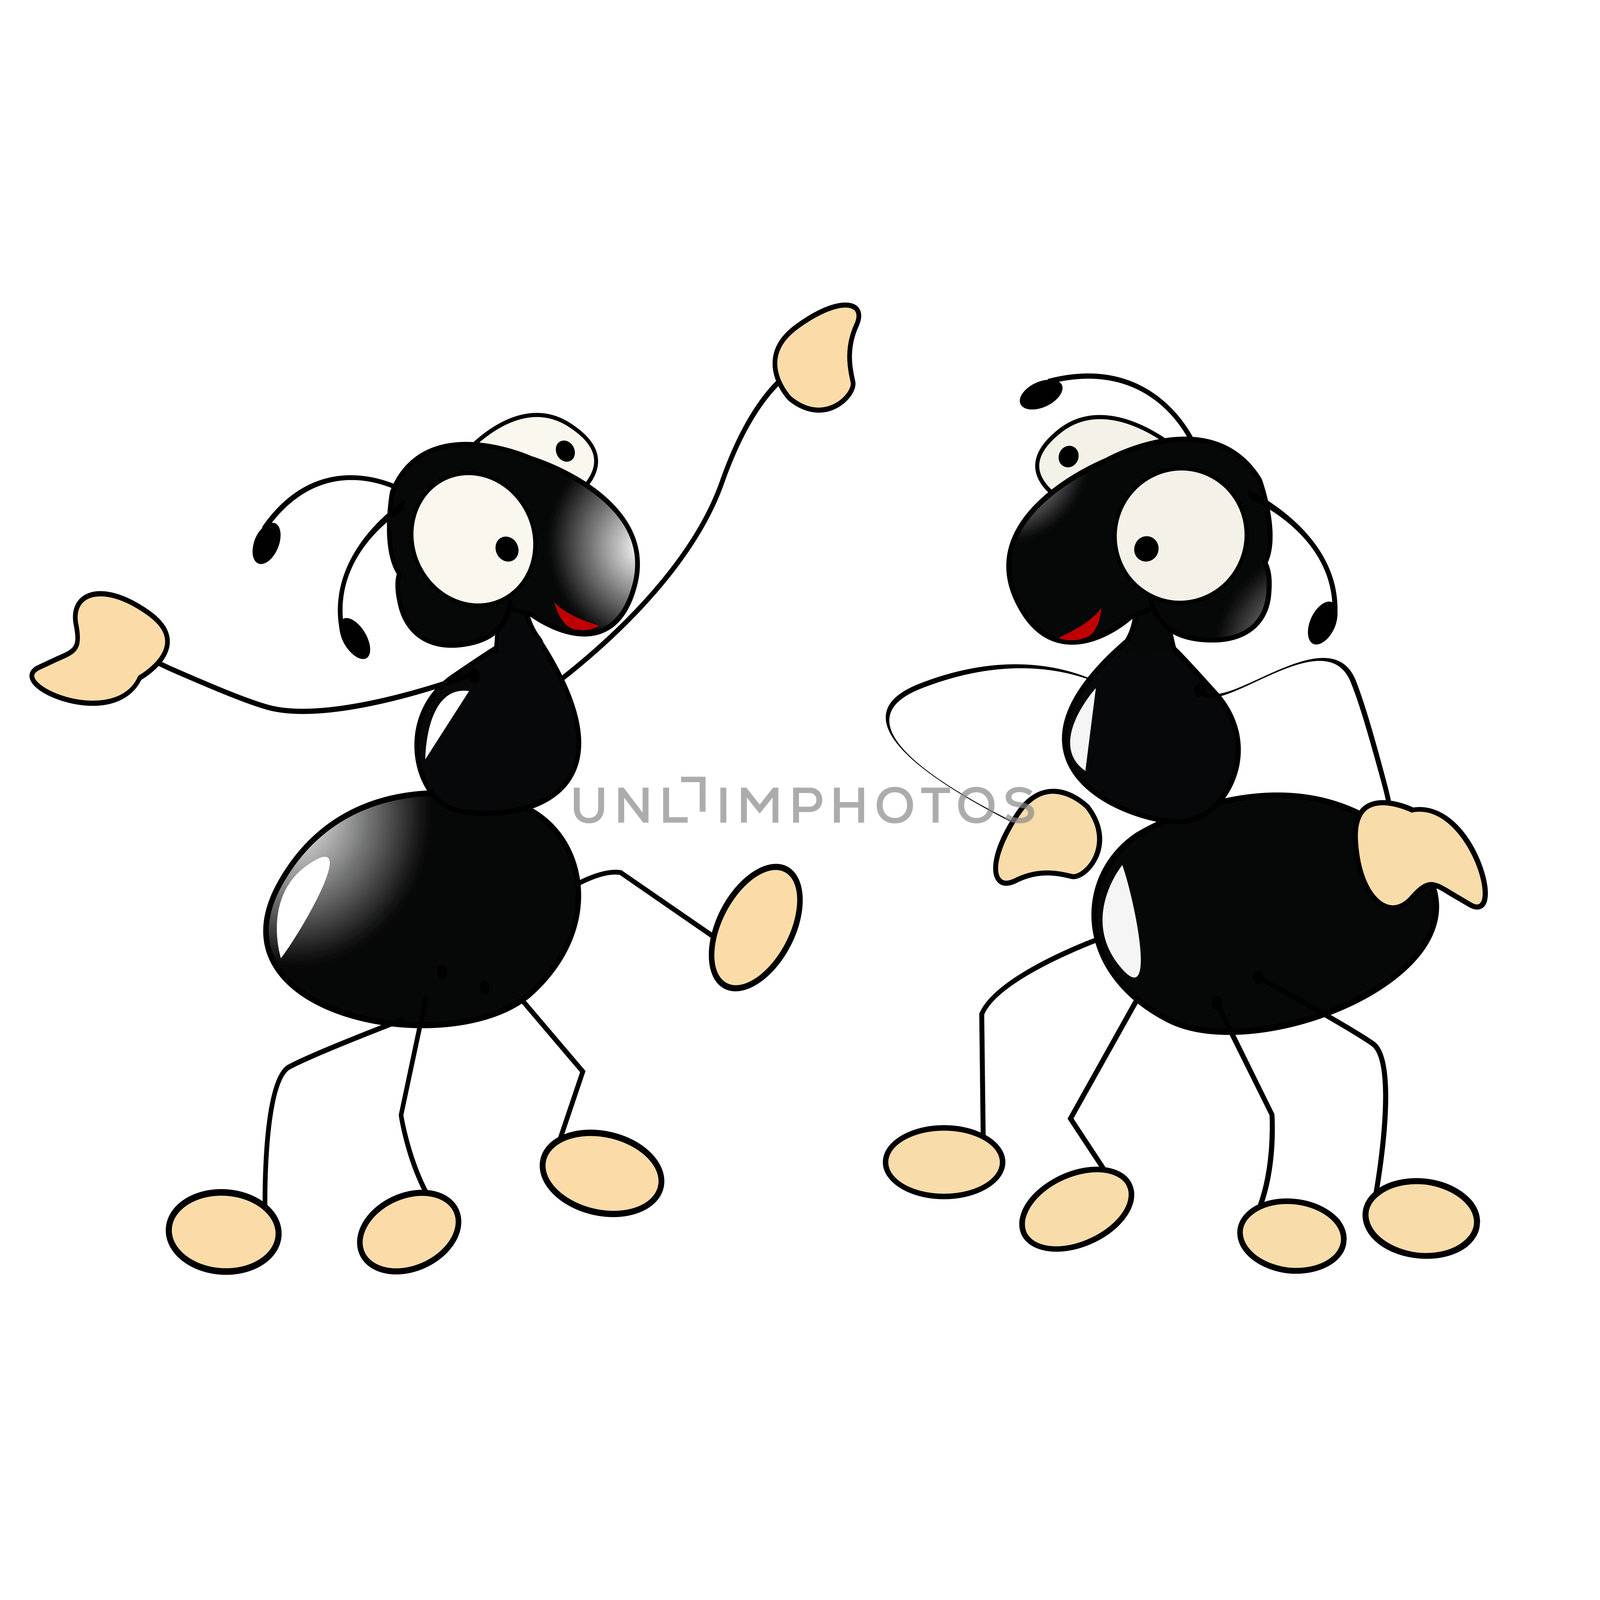 Two happy little ants dancing